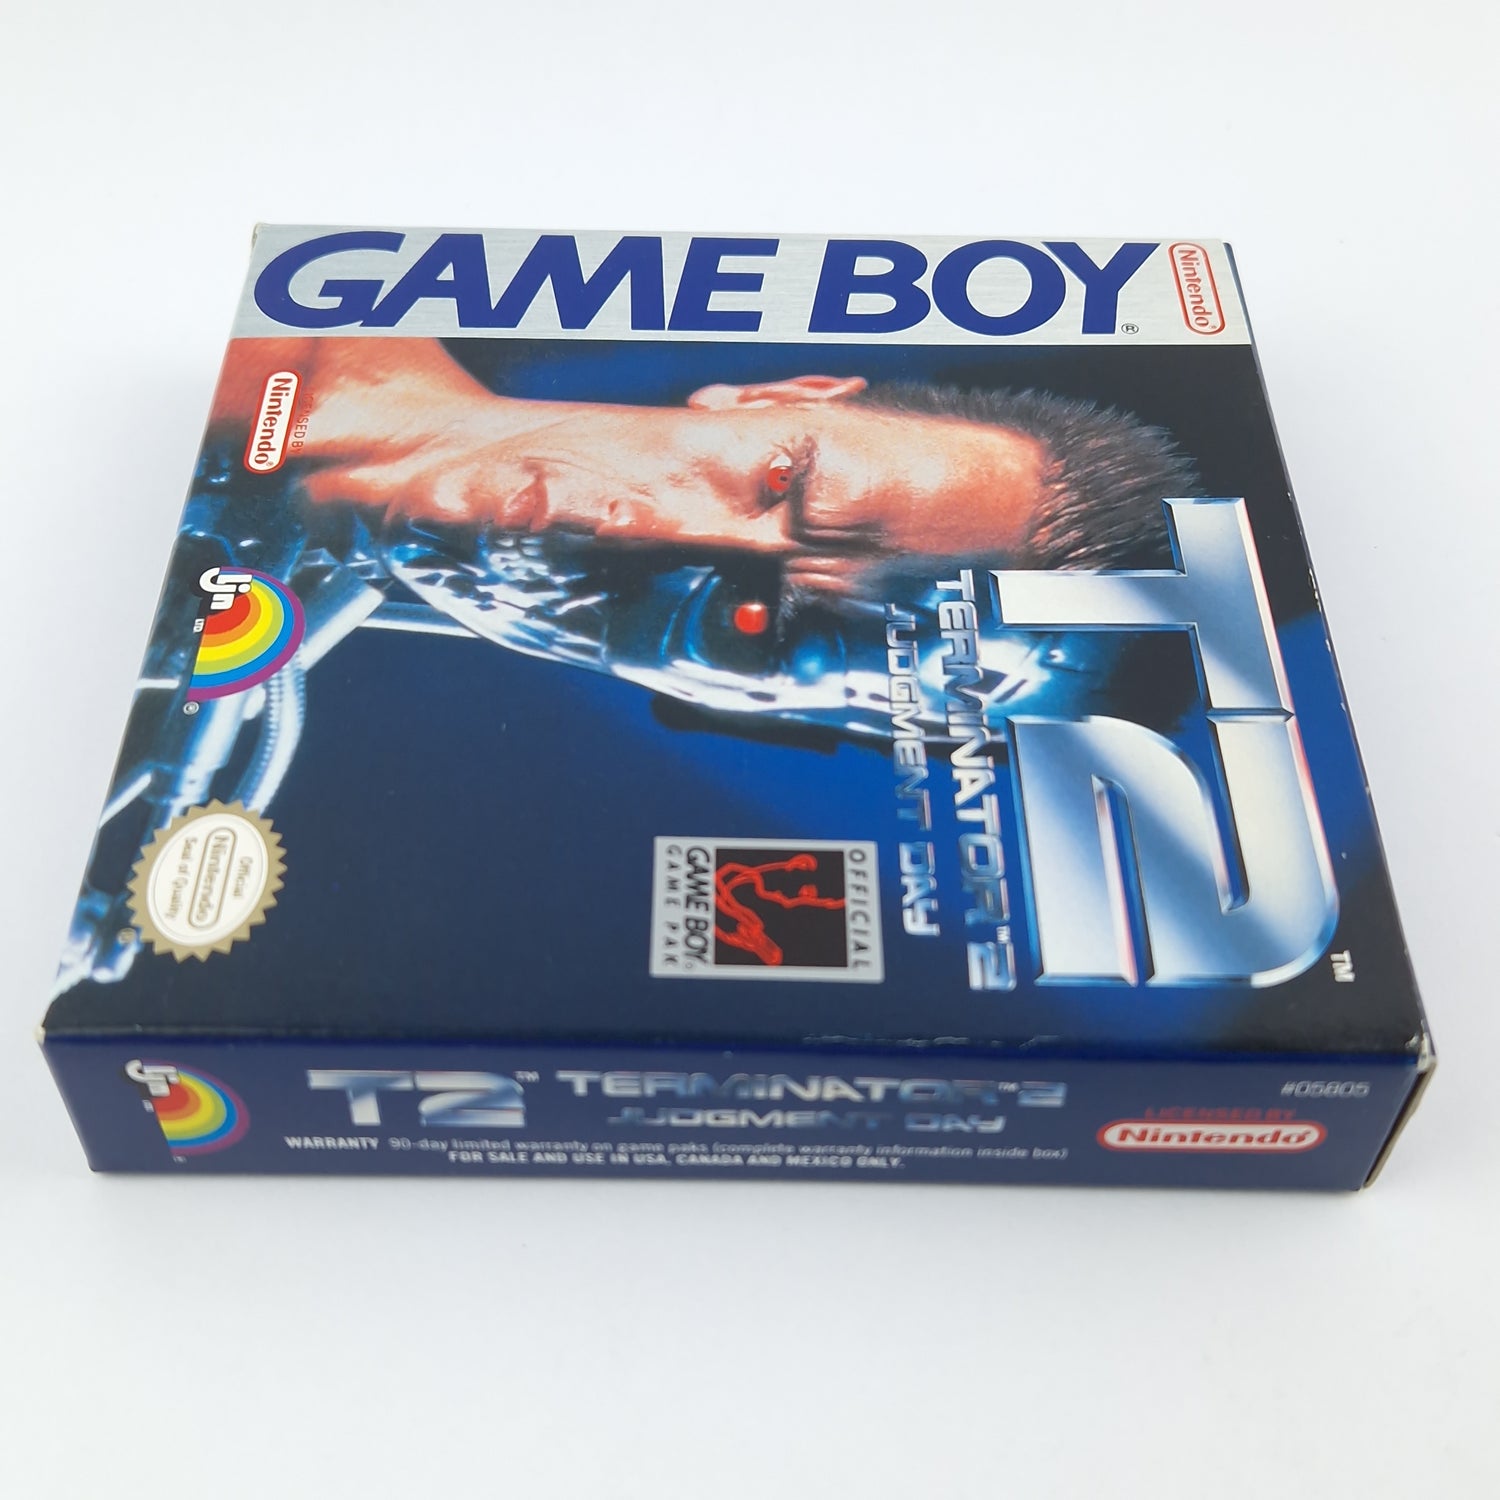 Nintendo Game Boy Classic Game: T2 Terminator 2 Judgment Day - OVP NTSC USA